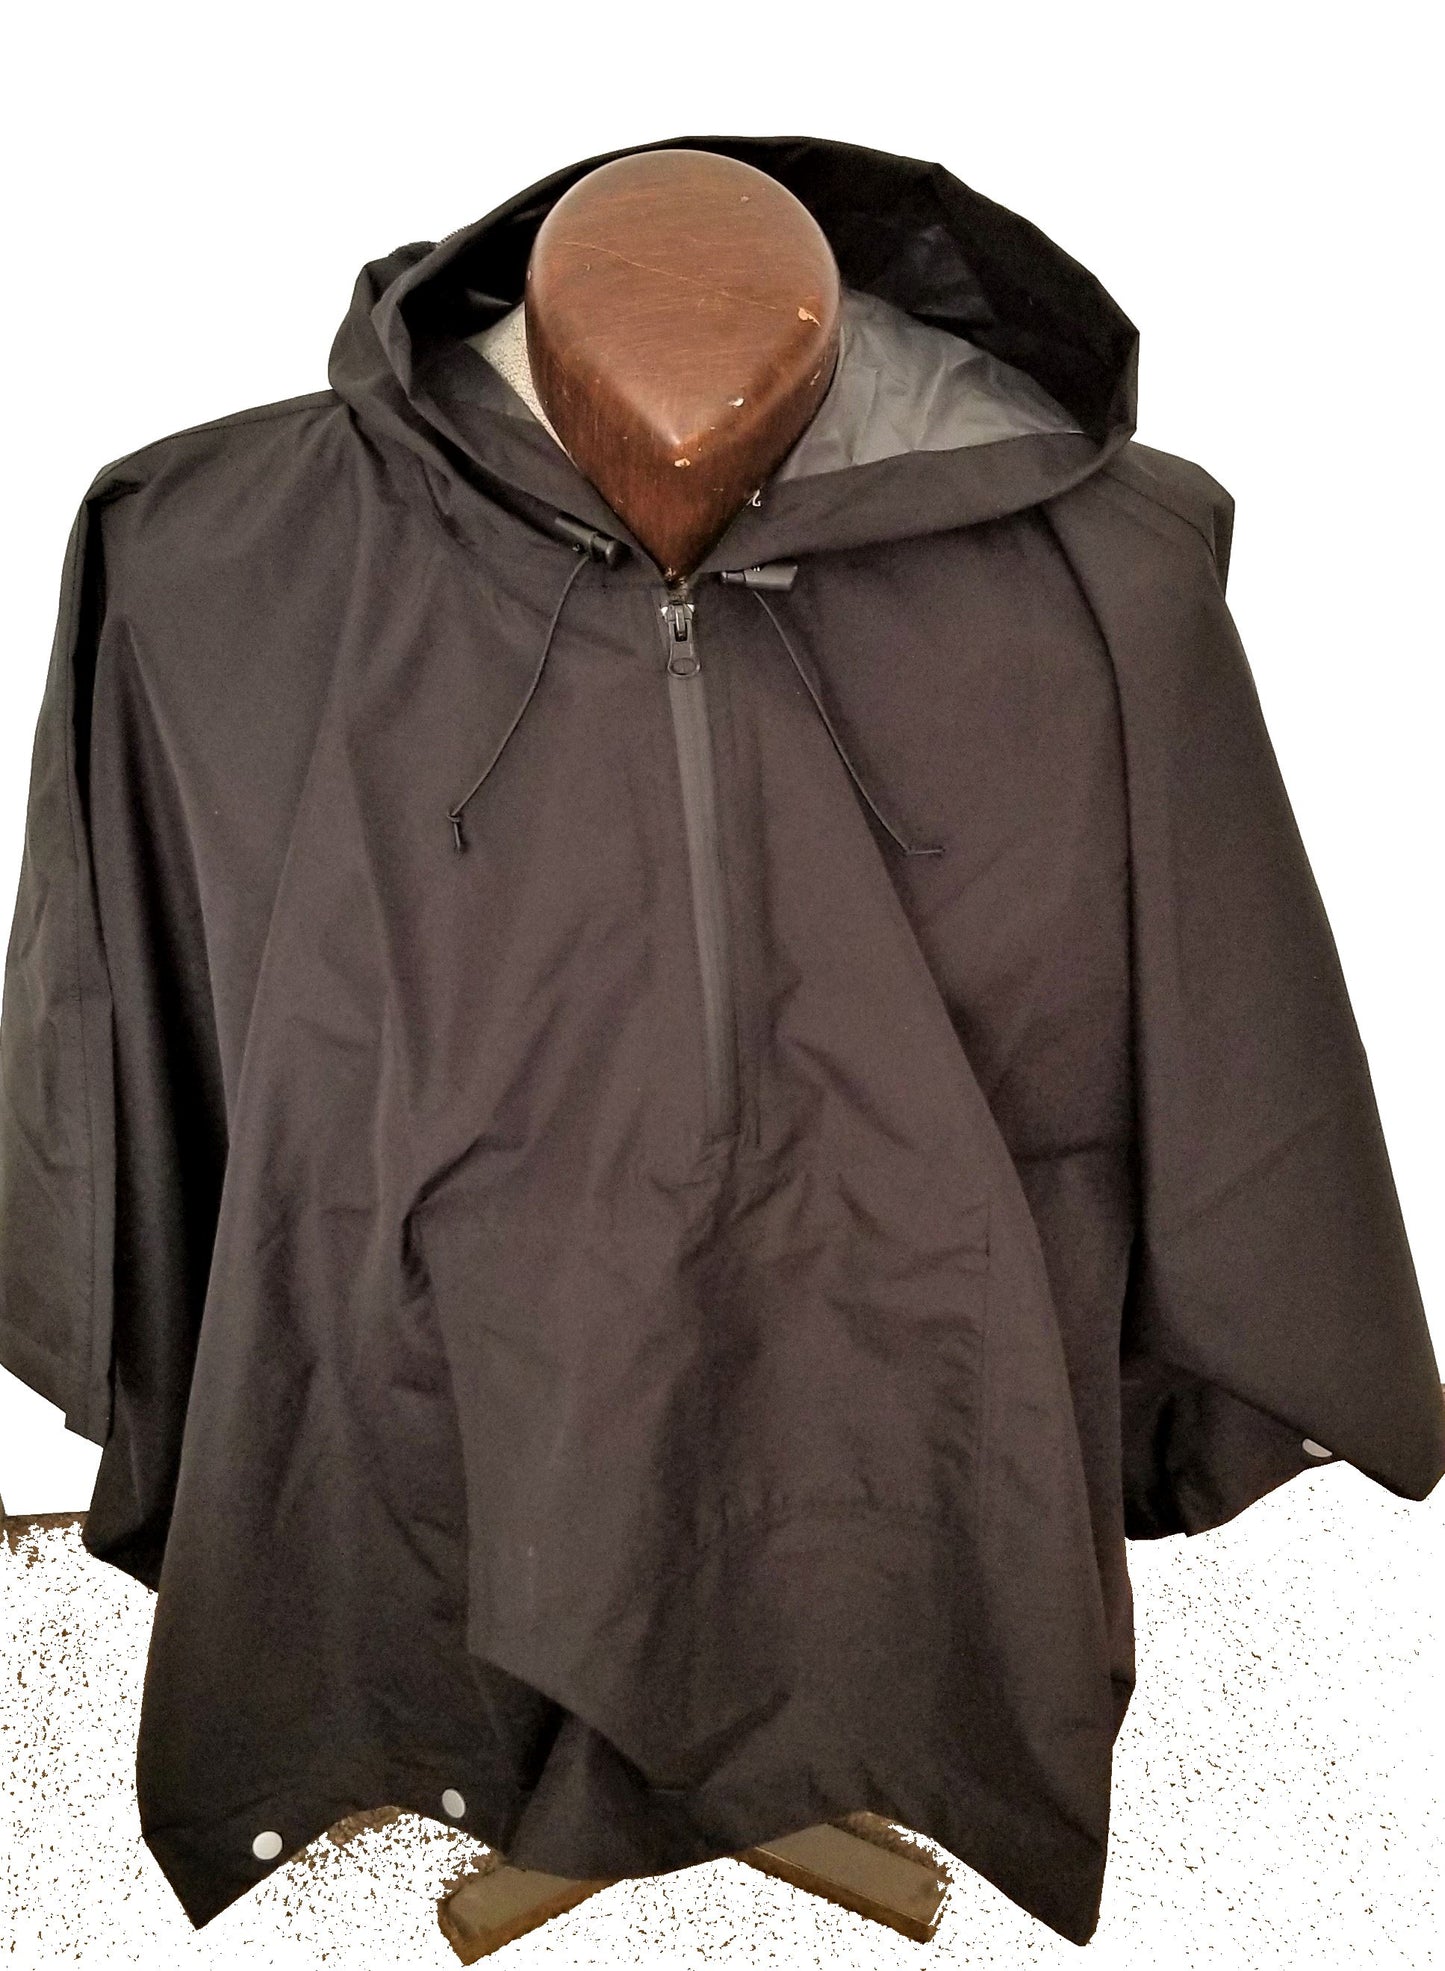 The Brella 101-BK - BLACK, Waterproof, Packable, High Performance, Lightweight Rain Wear, One Size Fits Most Outdoor Rain Wear BRELLA BRELLA 